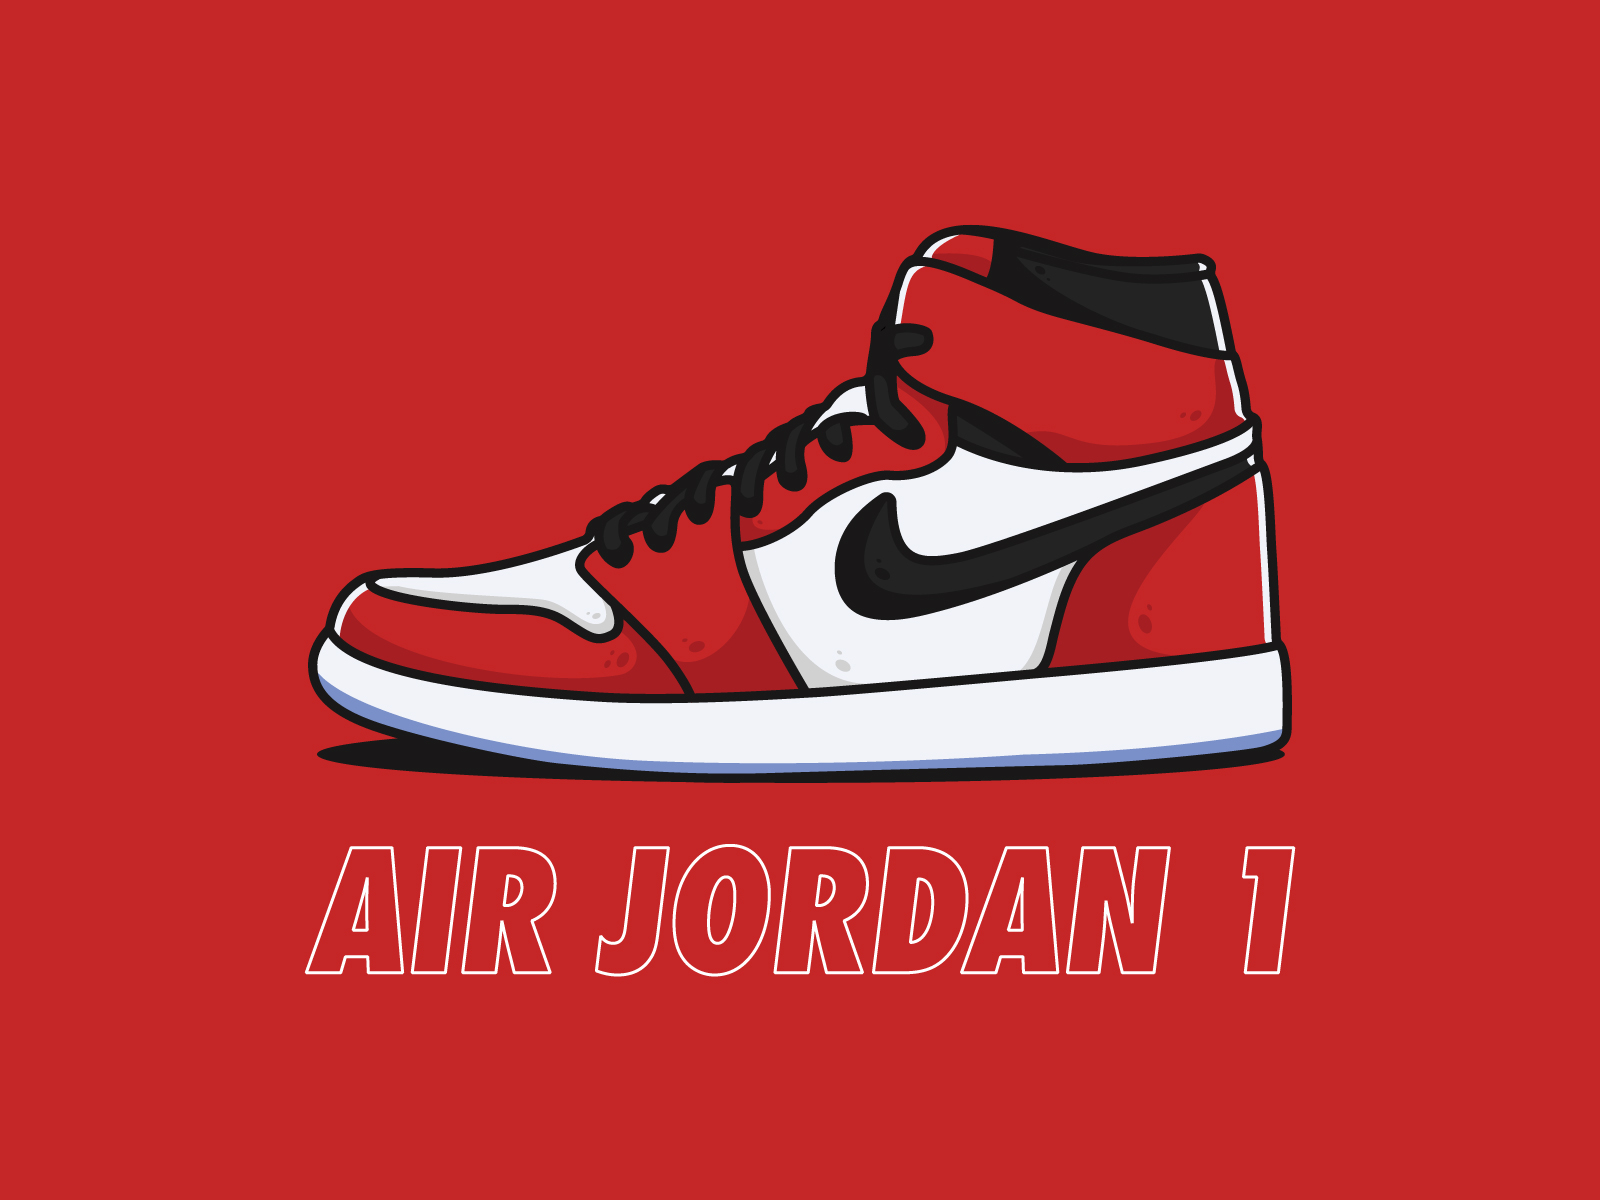 Air Jordan 1 Concept by Khevin Roa on Dribbble